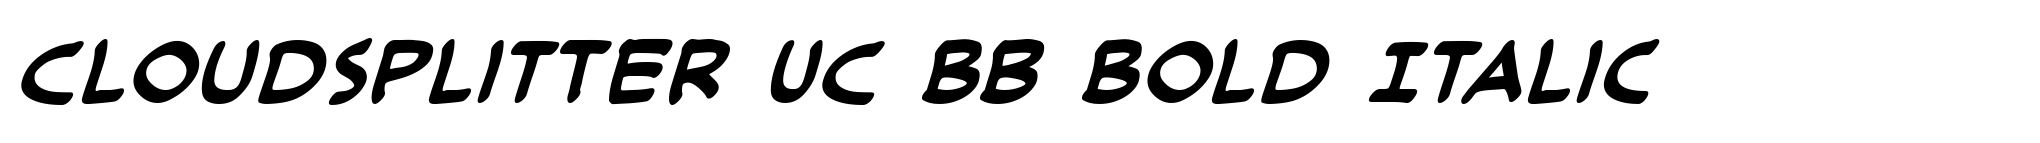 Cloudsplitter UC BB Bold Italic image